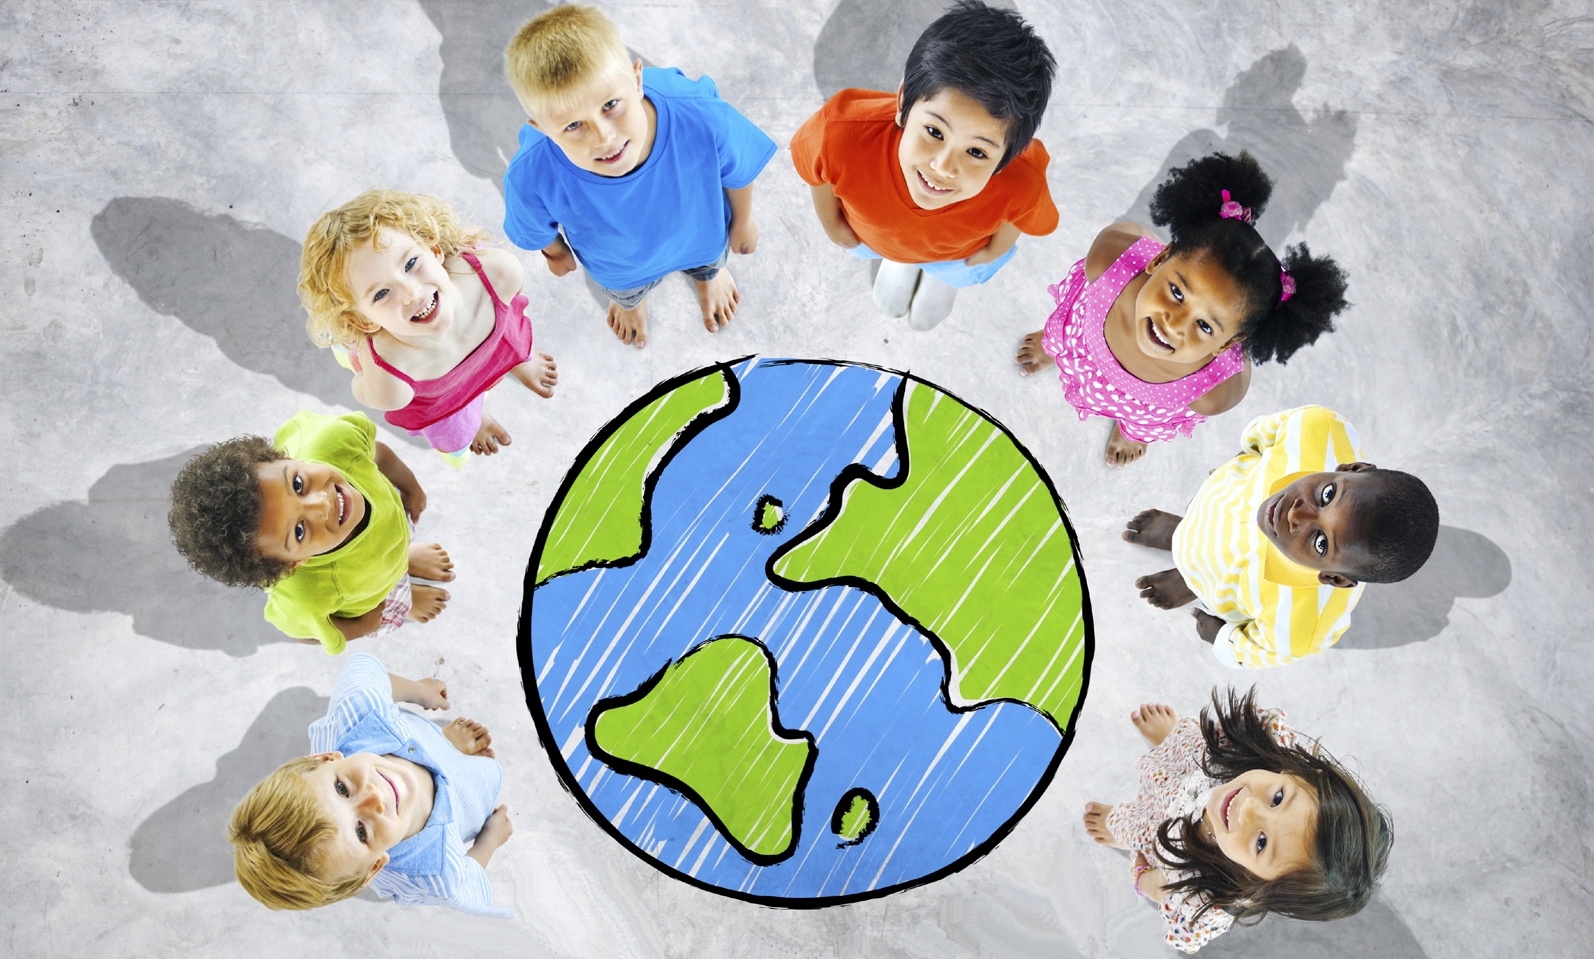 2020 international childrens day best wishes messages slogans for kids